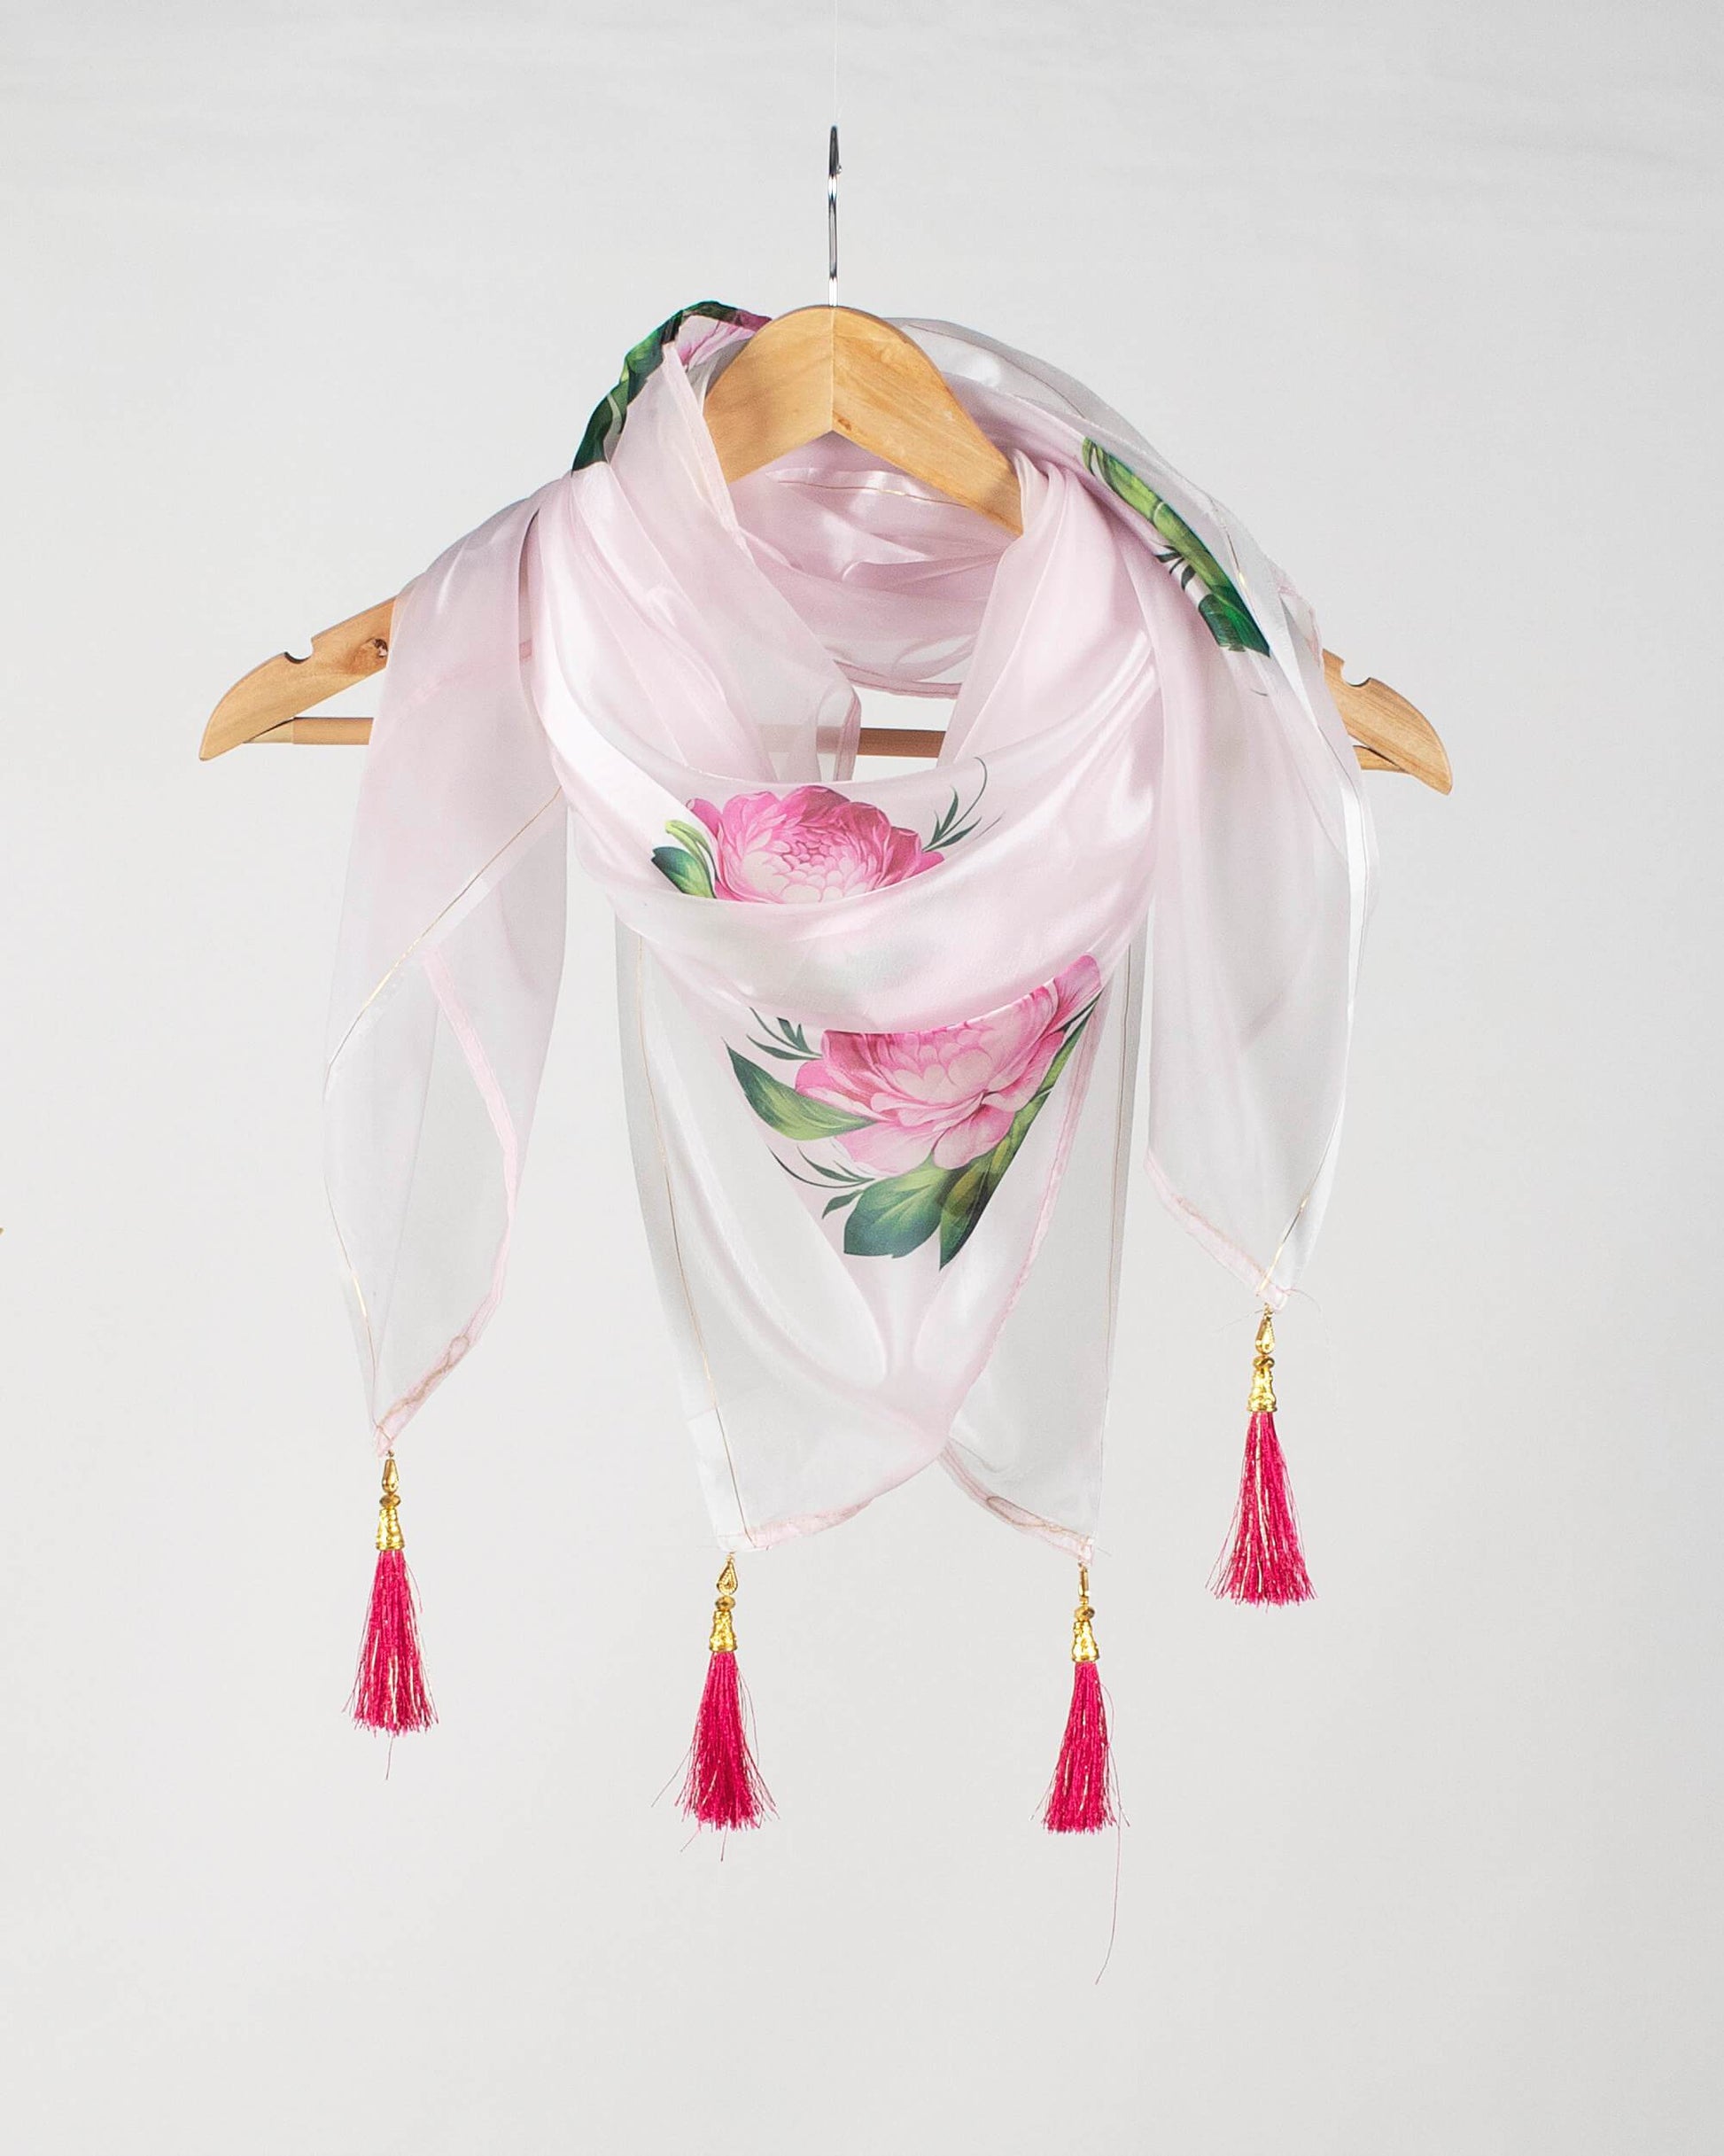 Buy E-Clover Women Soft Floral Print Shawl Chiffon Sheer Scarf (Black&Pink)  at